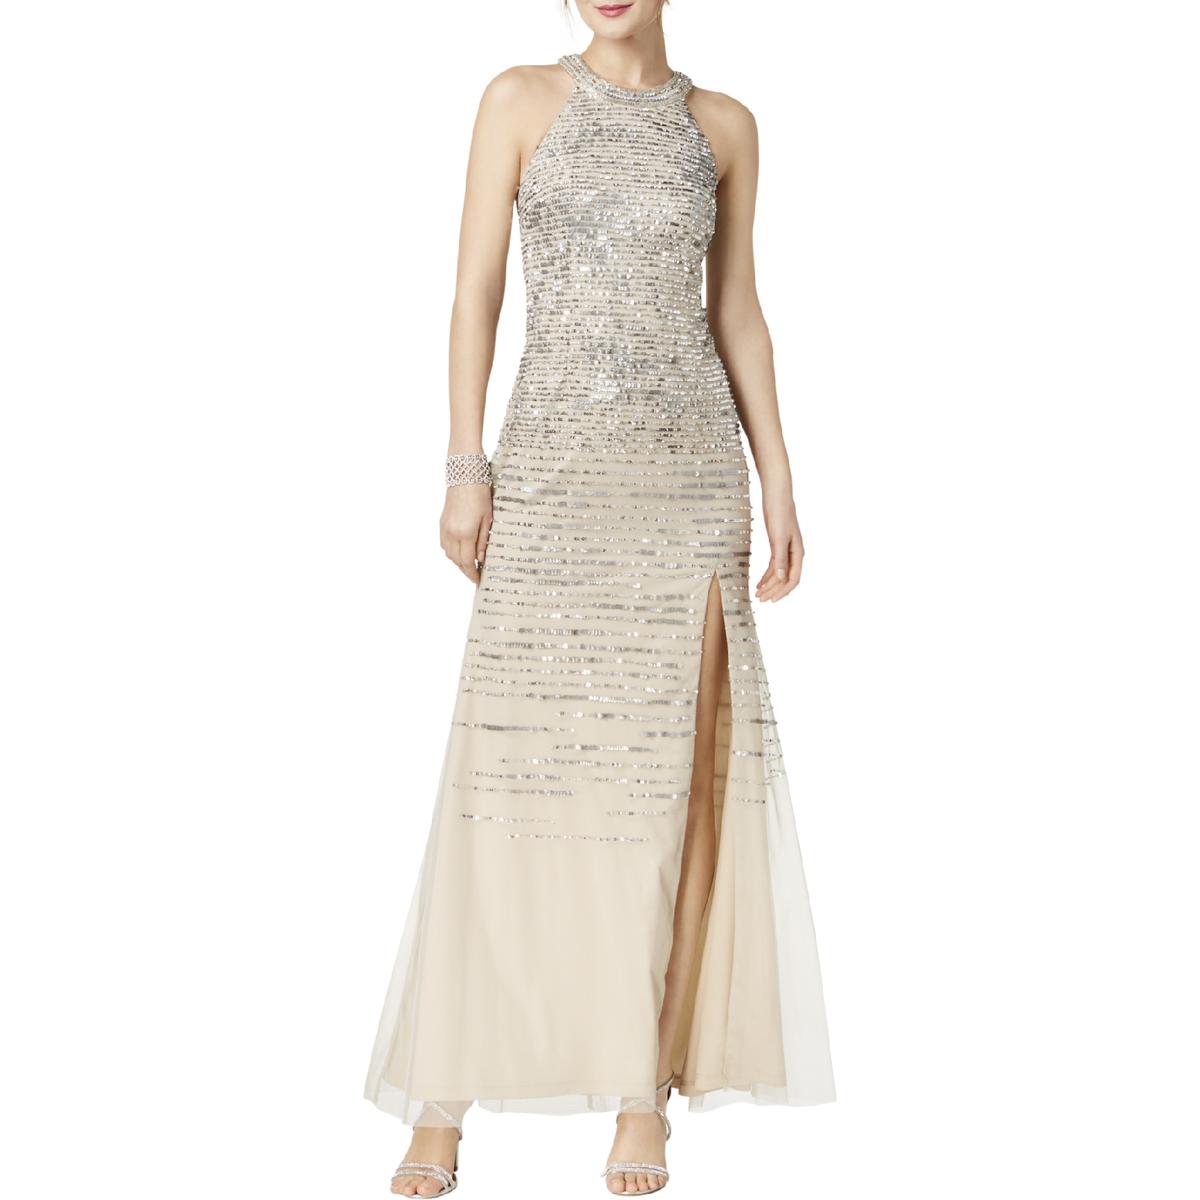 Adrianna Papell Womens Beige Halter Sequined Evening Dress Gown 8 BHFO 6426 191937015264 | eBay